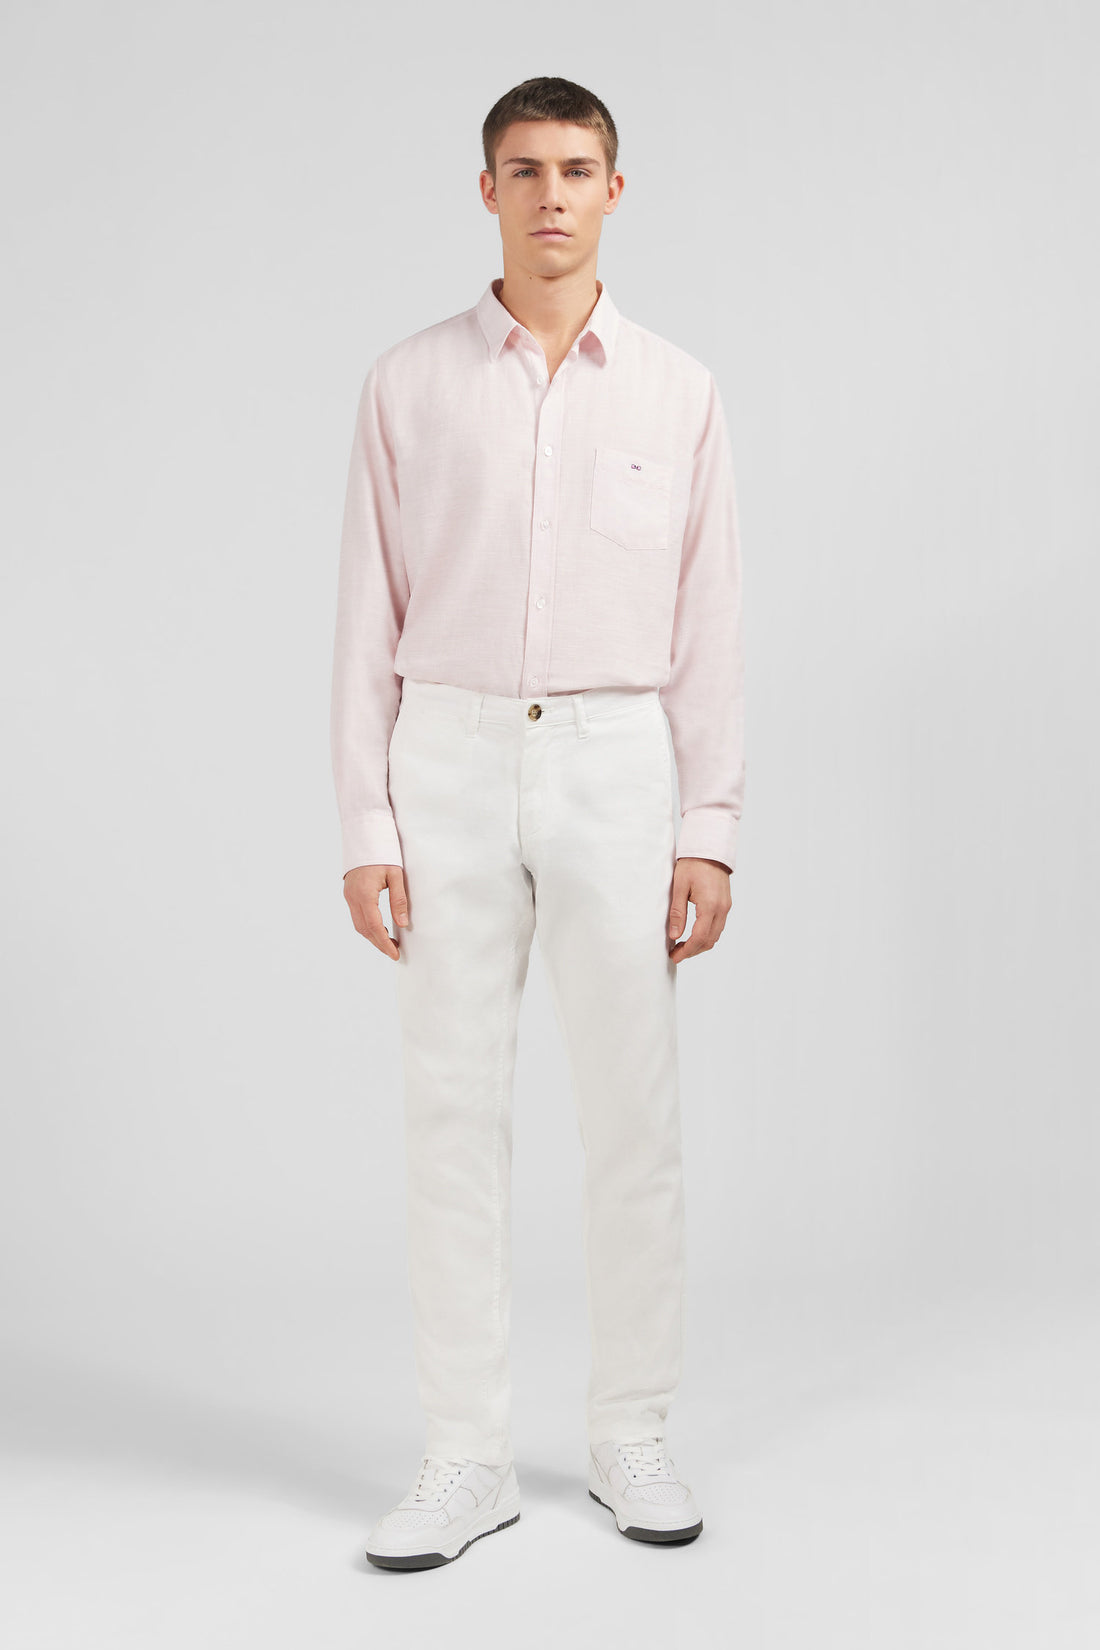 Plain Pink Shirt_E24Checl0018_Roc11_01